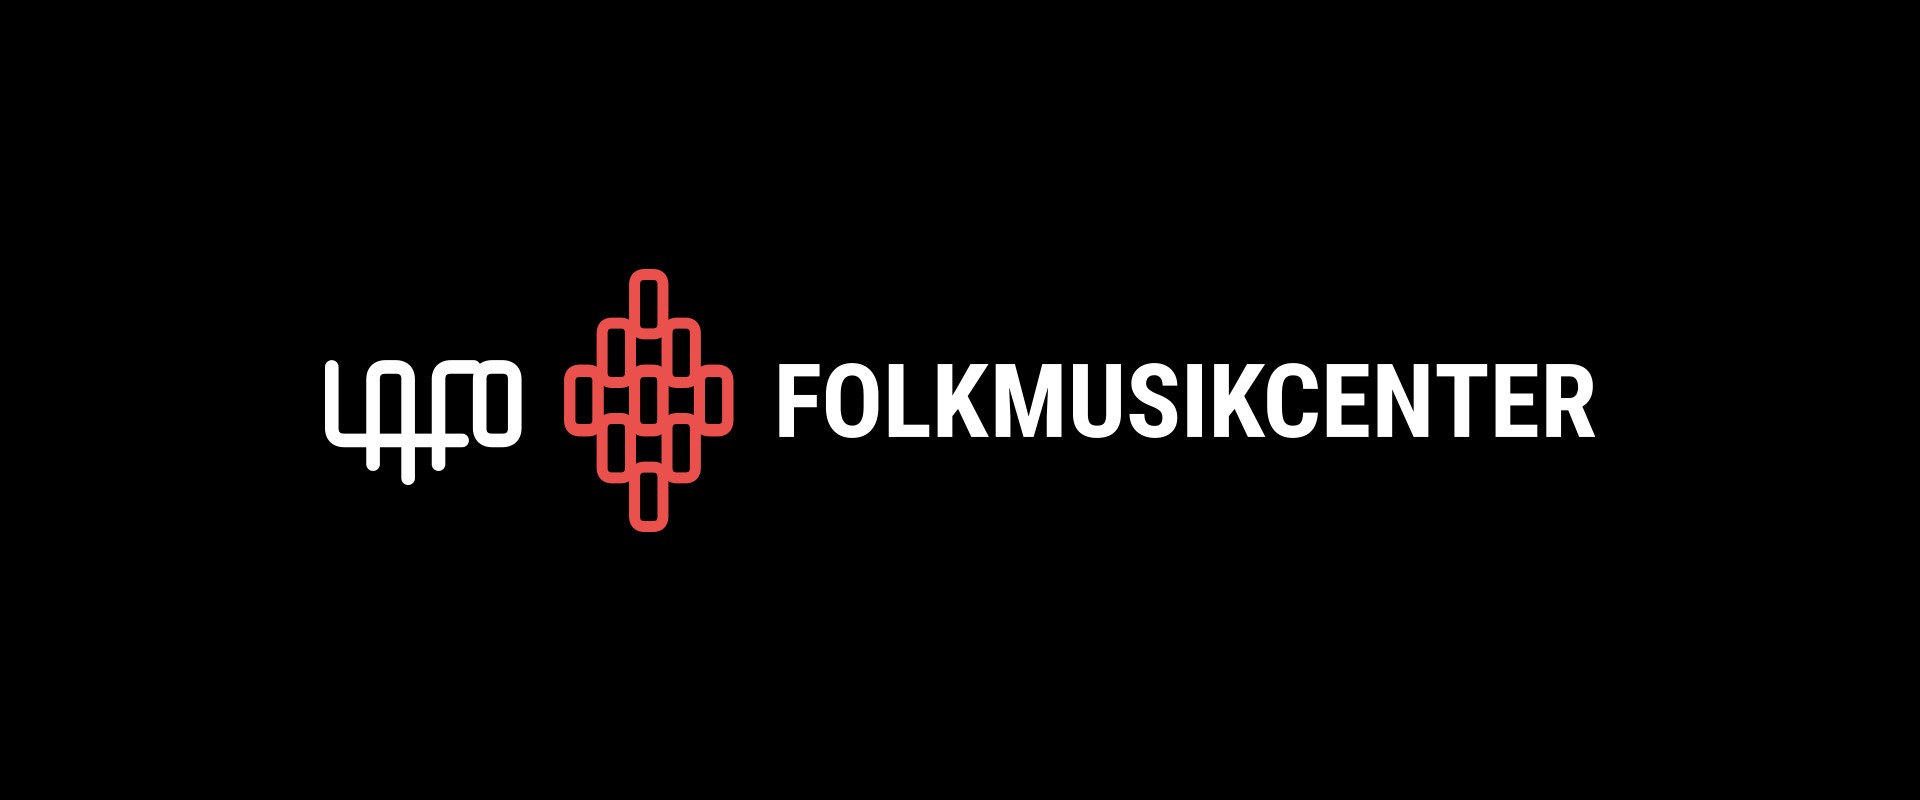 Folkmusik logo3